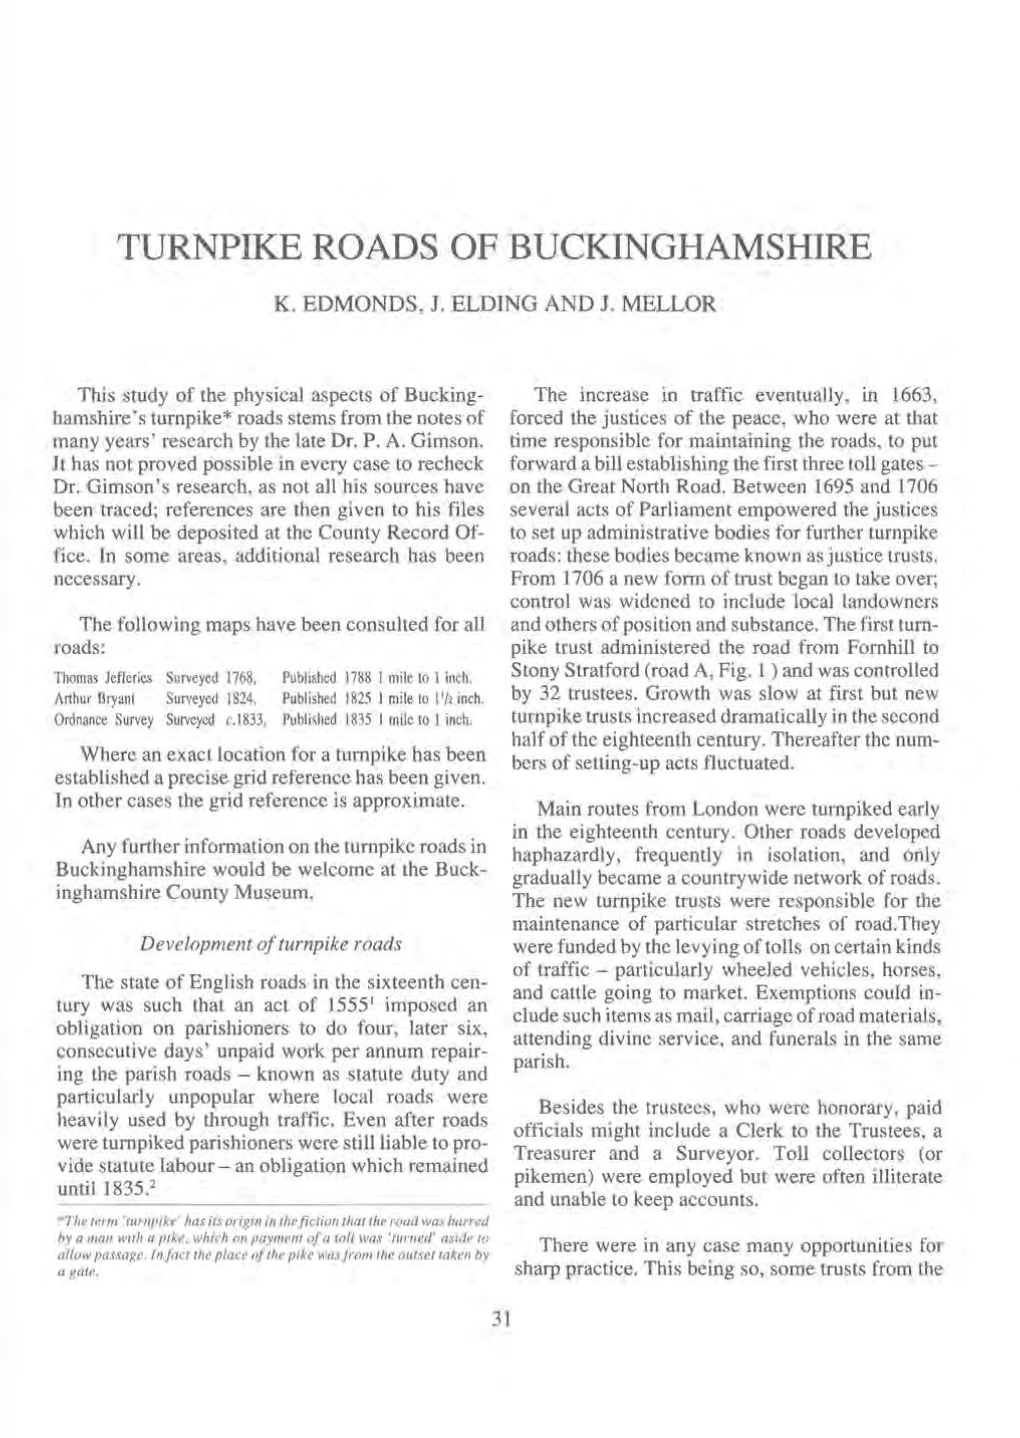 Turnpike Roads of Buckinghamshire